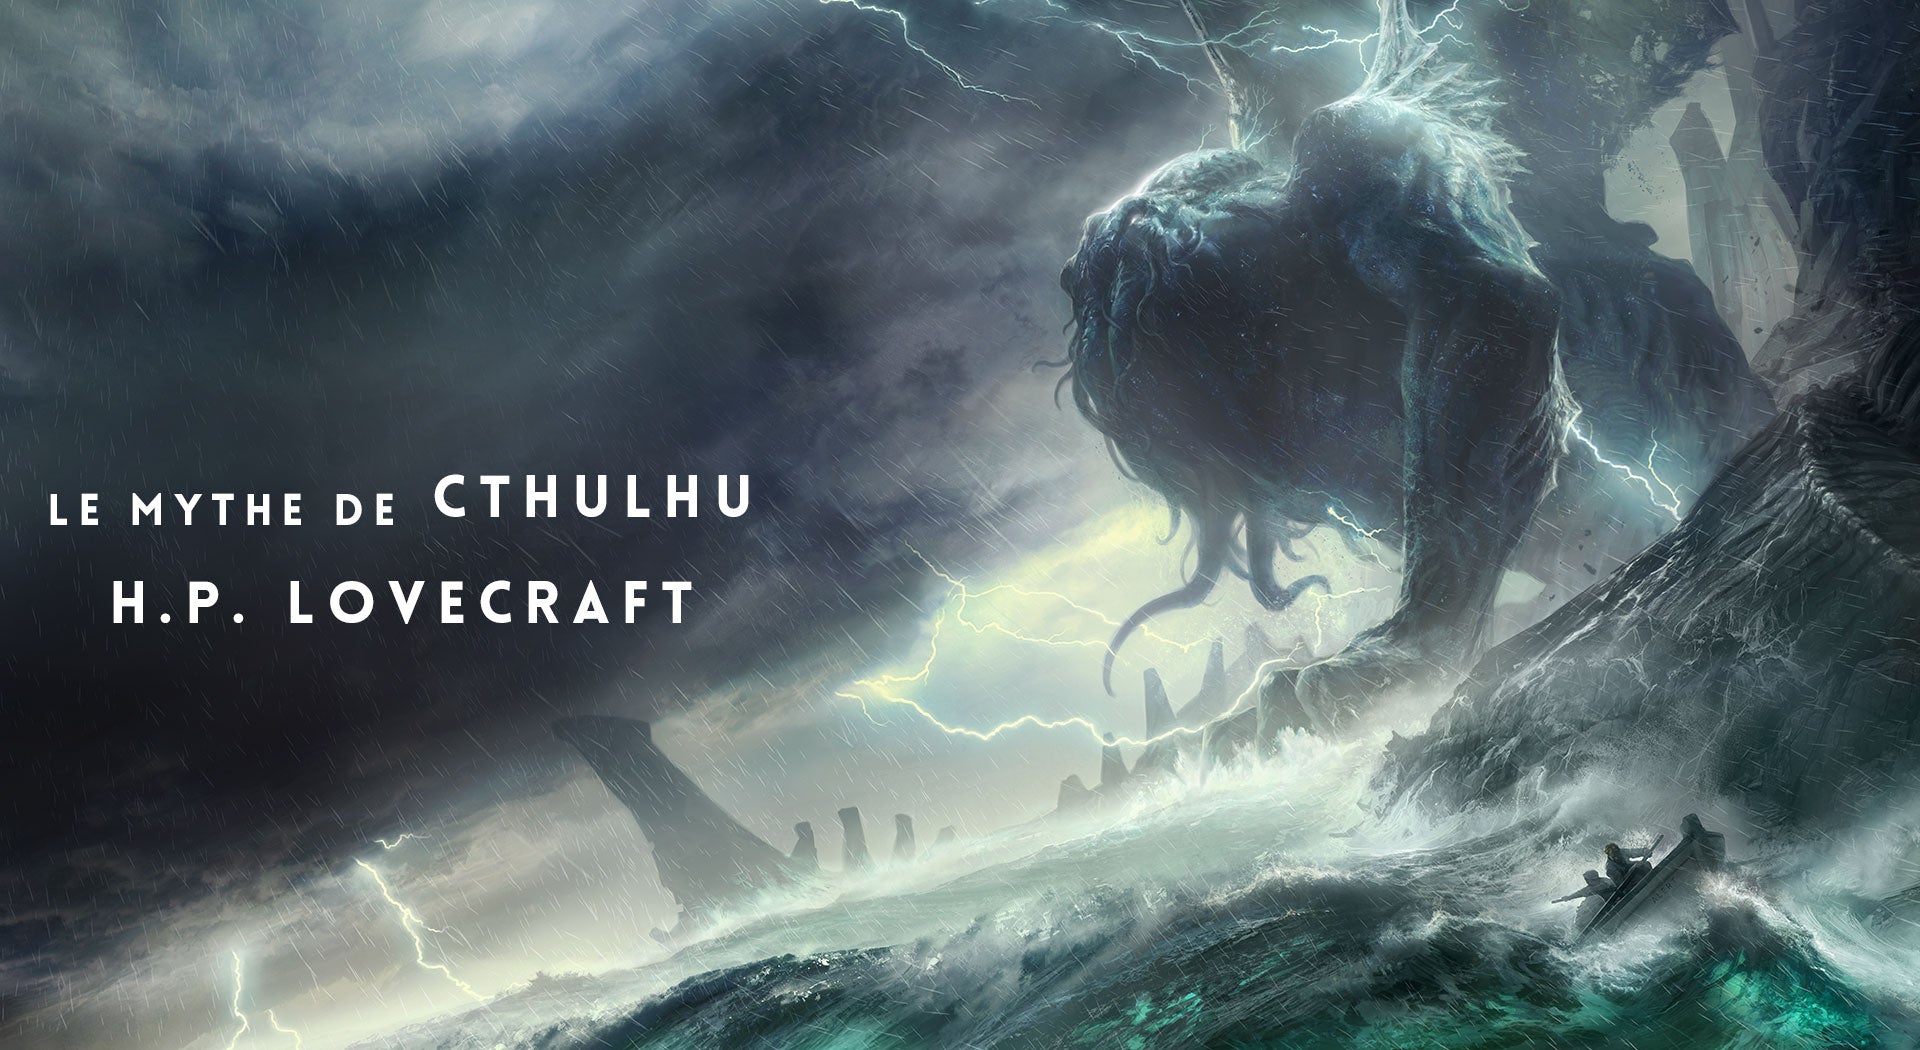 H.P. Lovecraft illustrated - Le mythe de Cthulhu - Cthulhu Mythos